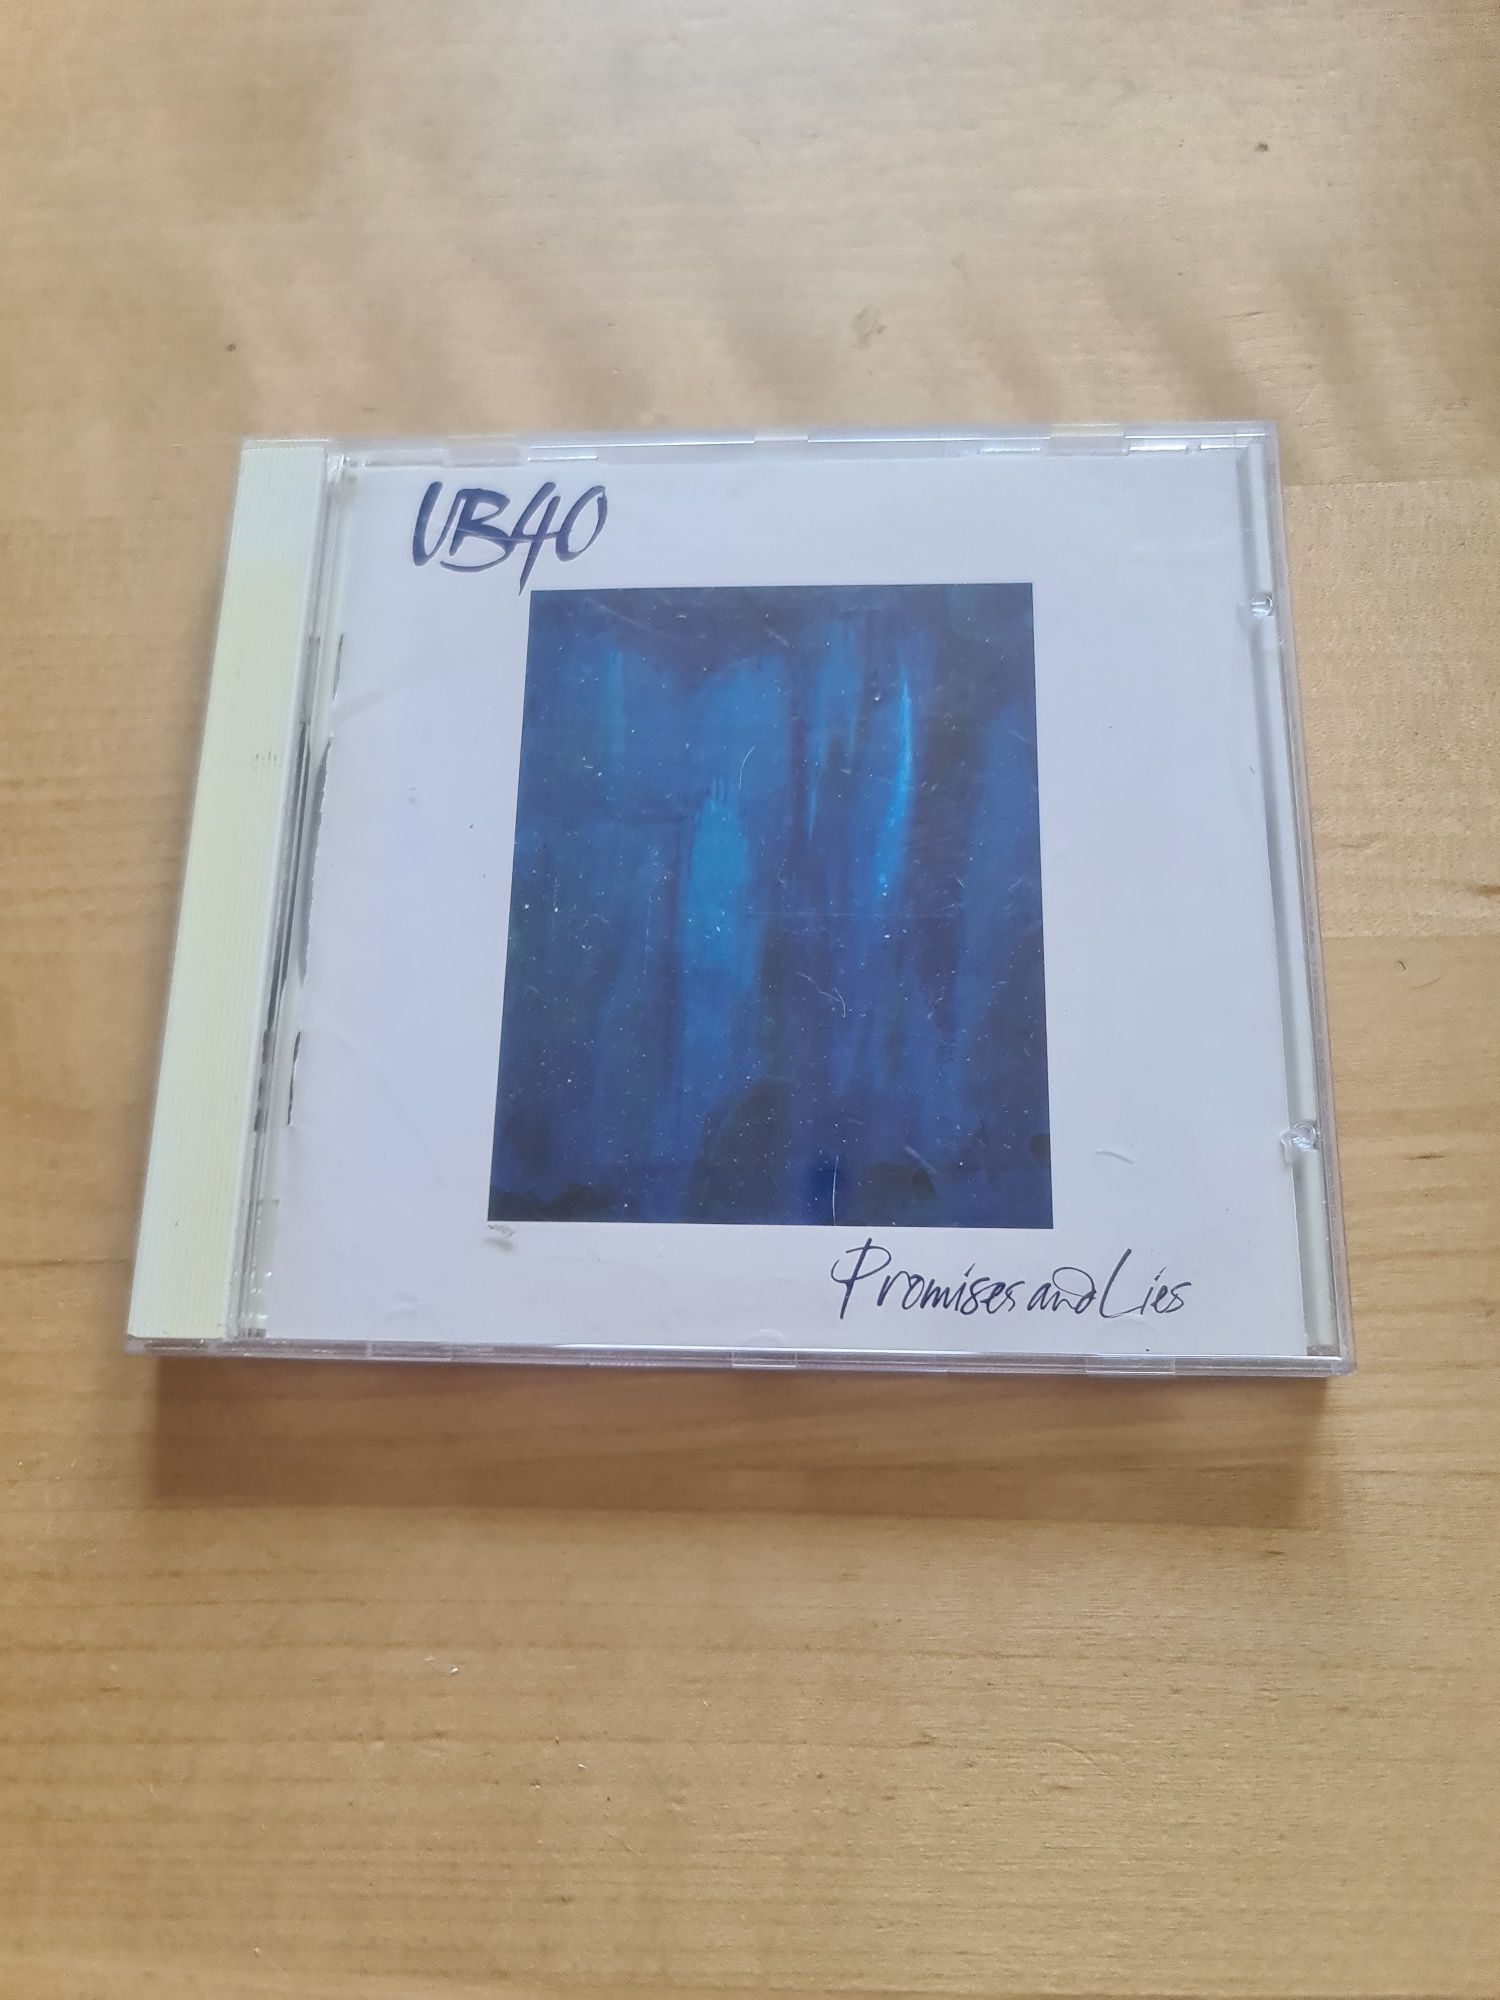 Płyta CD UB40 - Promises and Lies